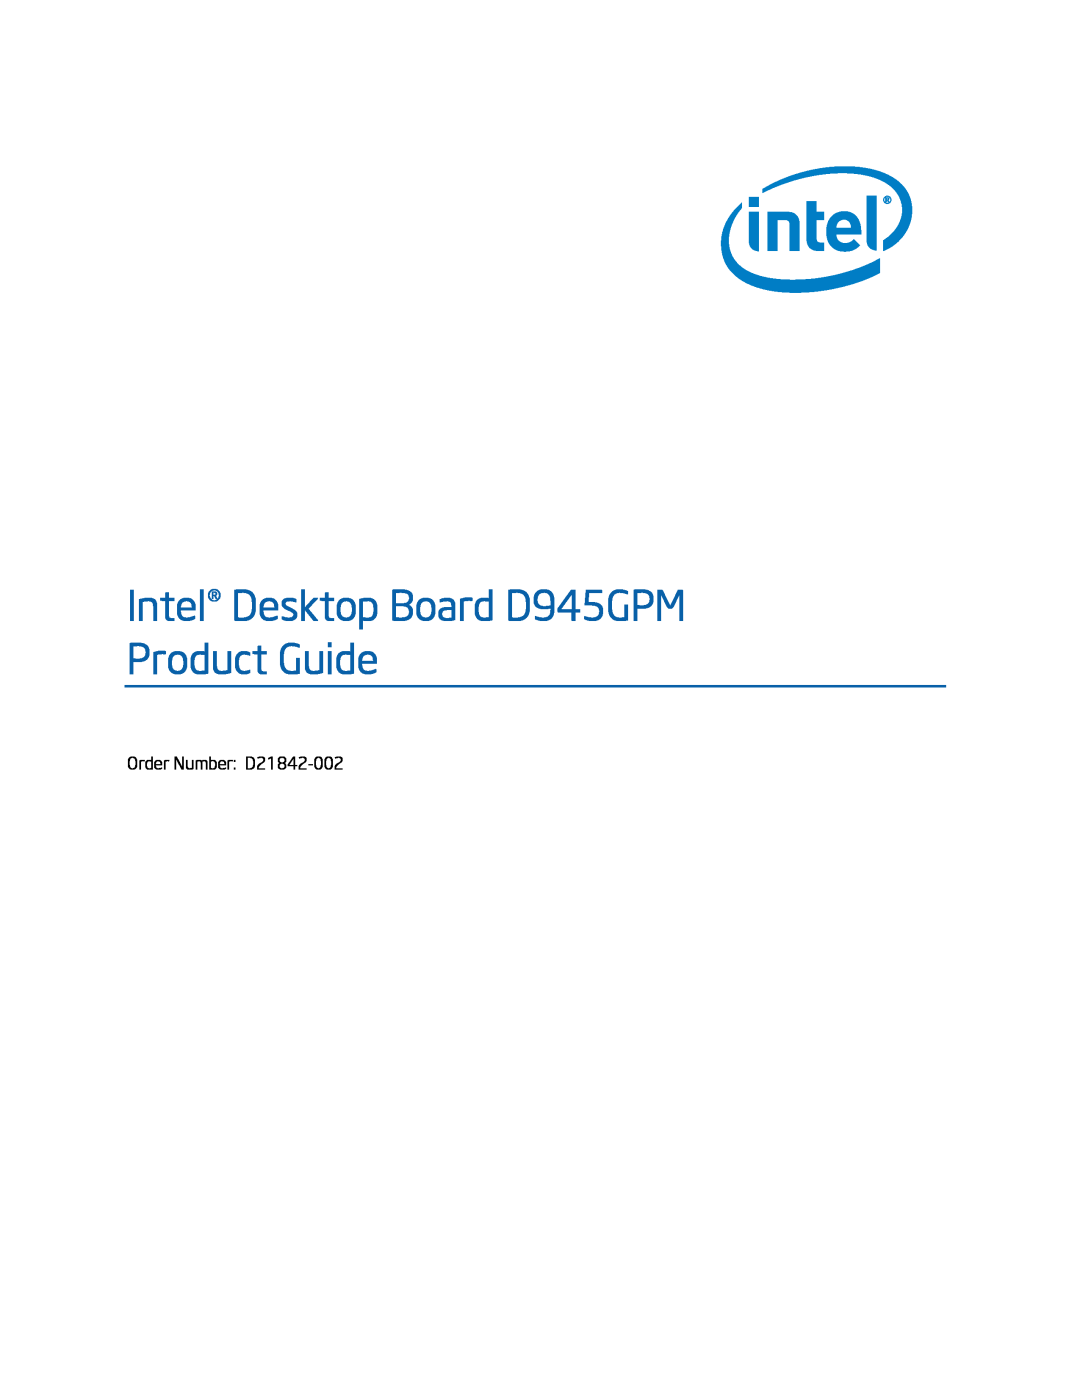 Intel manual Intel Desktop Board D945GPM Product Guide, Order Number D21842-002 